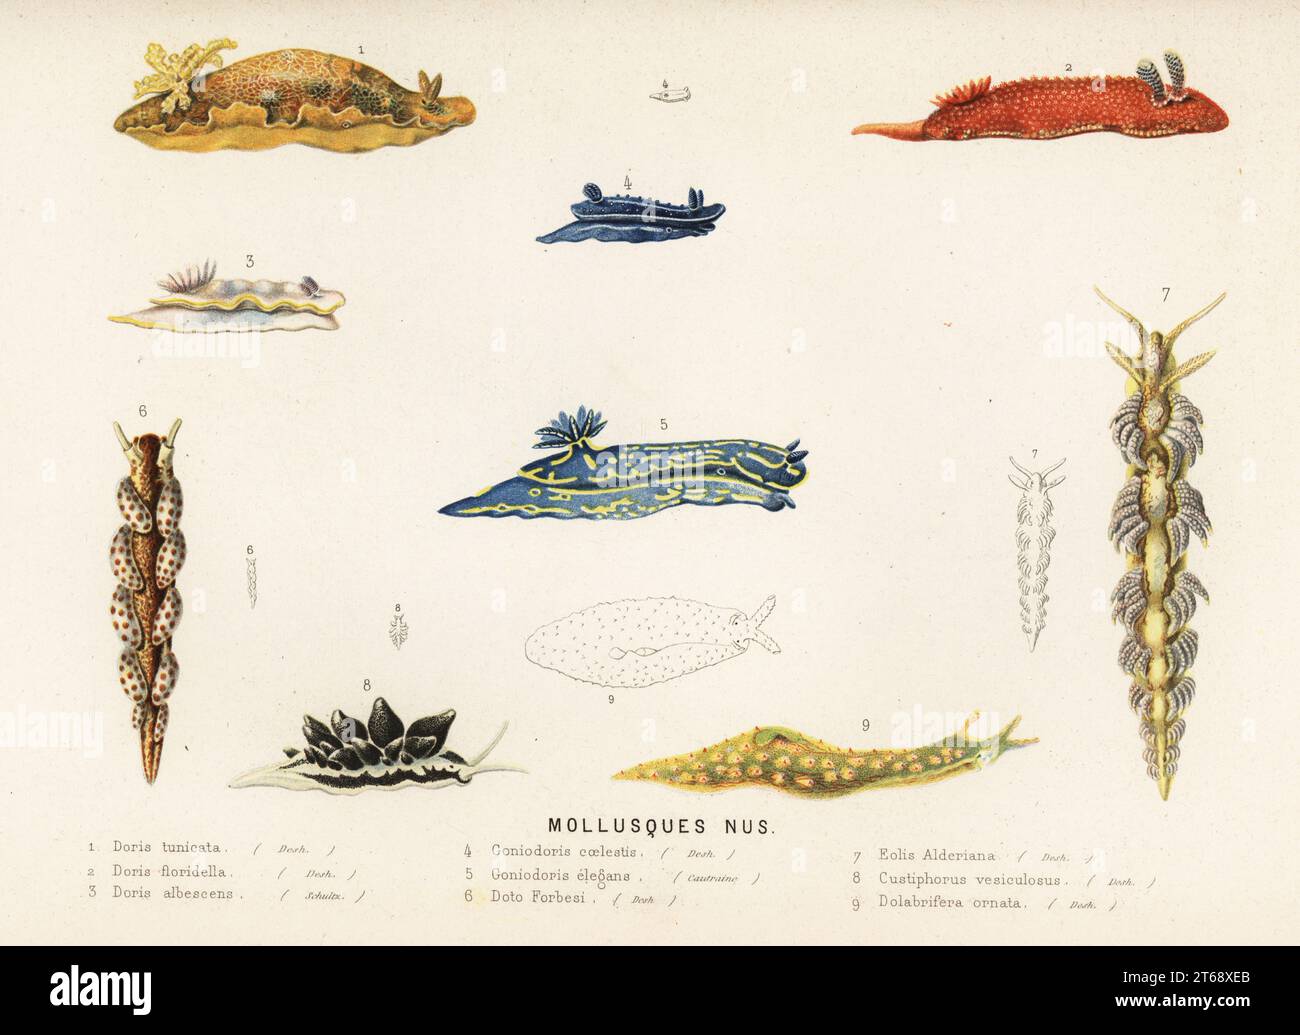 Sea slug mollusc species. Doris tunicata 1, Doris floridella 2, Felimida purpurea 3, Felimare orsinii 4, Felimare picta 5, Doto coronata 6, Spurilla neapolitana 7, Calliopaea bellula 8, and Dolabrifera ornata 9. Molluscs nus. Chromolithograph from Alfred Fredols Le Monde de la Mer, the World of the Sea, edited by Olivier Fredol, Librairie Hachette et. Cie., Paris, 1881. Alfred Fredol was the pseudonym of French zoologist and botanist Alfred Moquin-Tandon, 1804-1863. Stock Photo